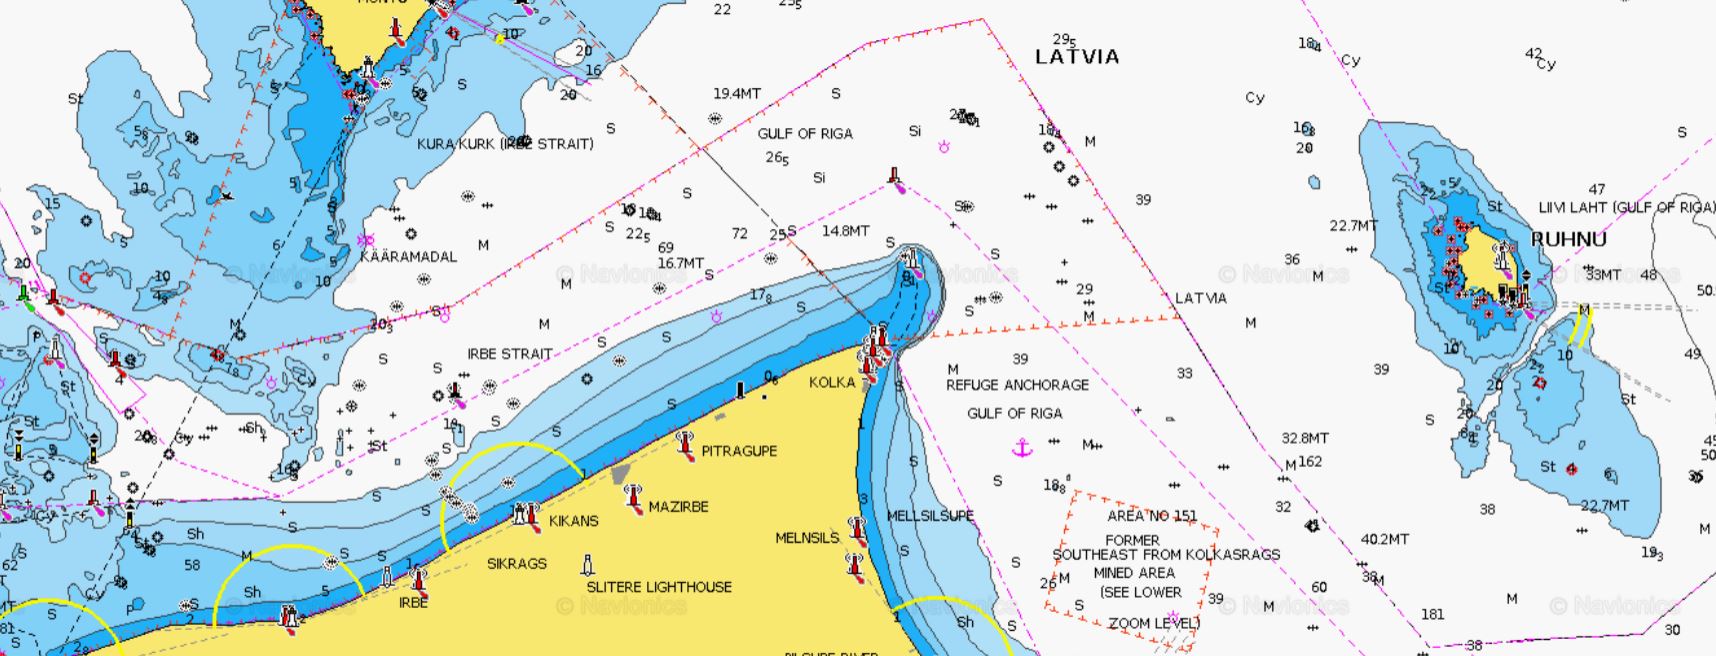 Latvijas kuģu vraku karte